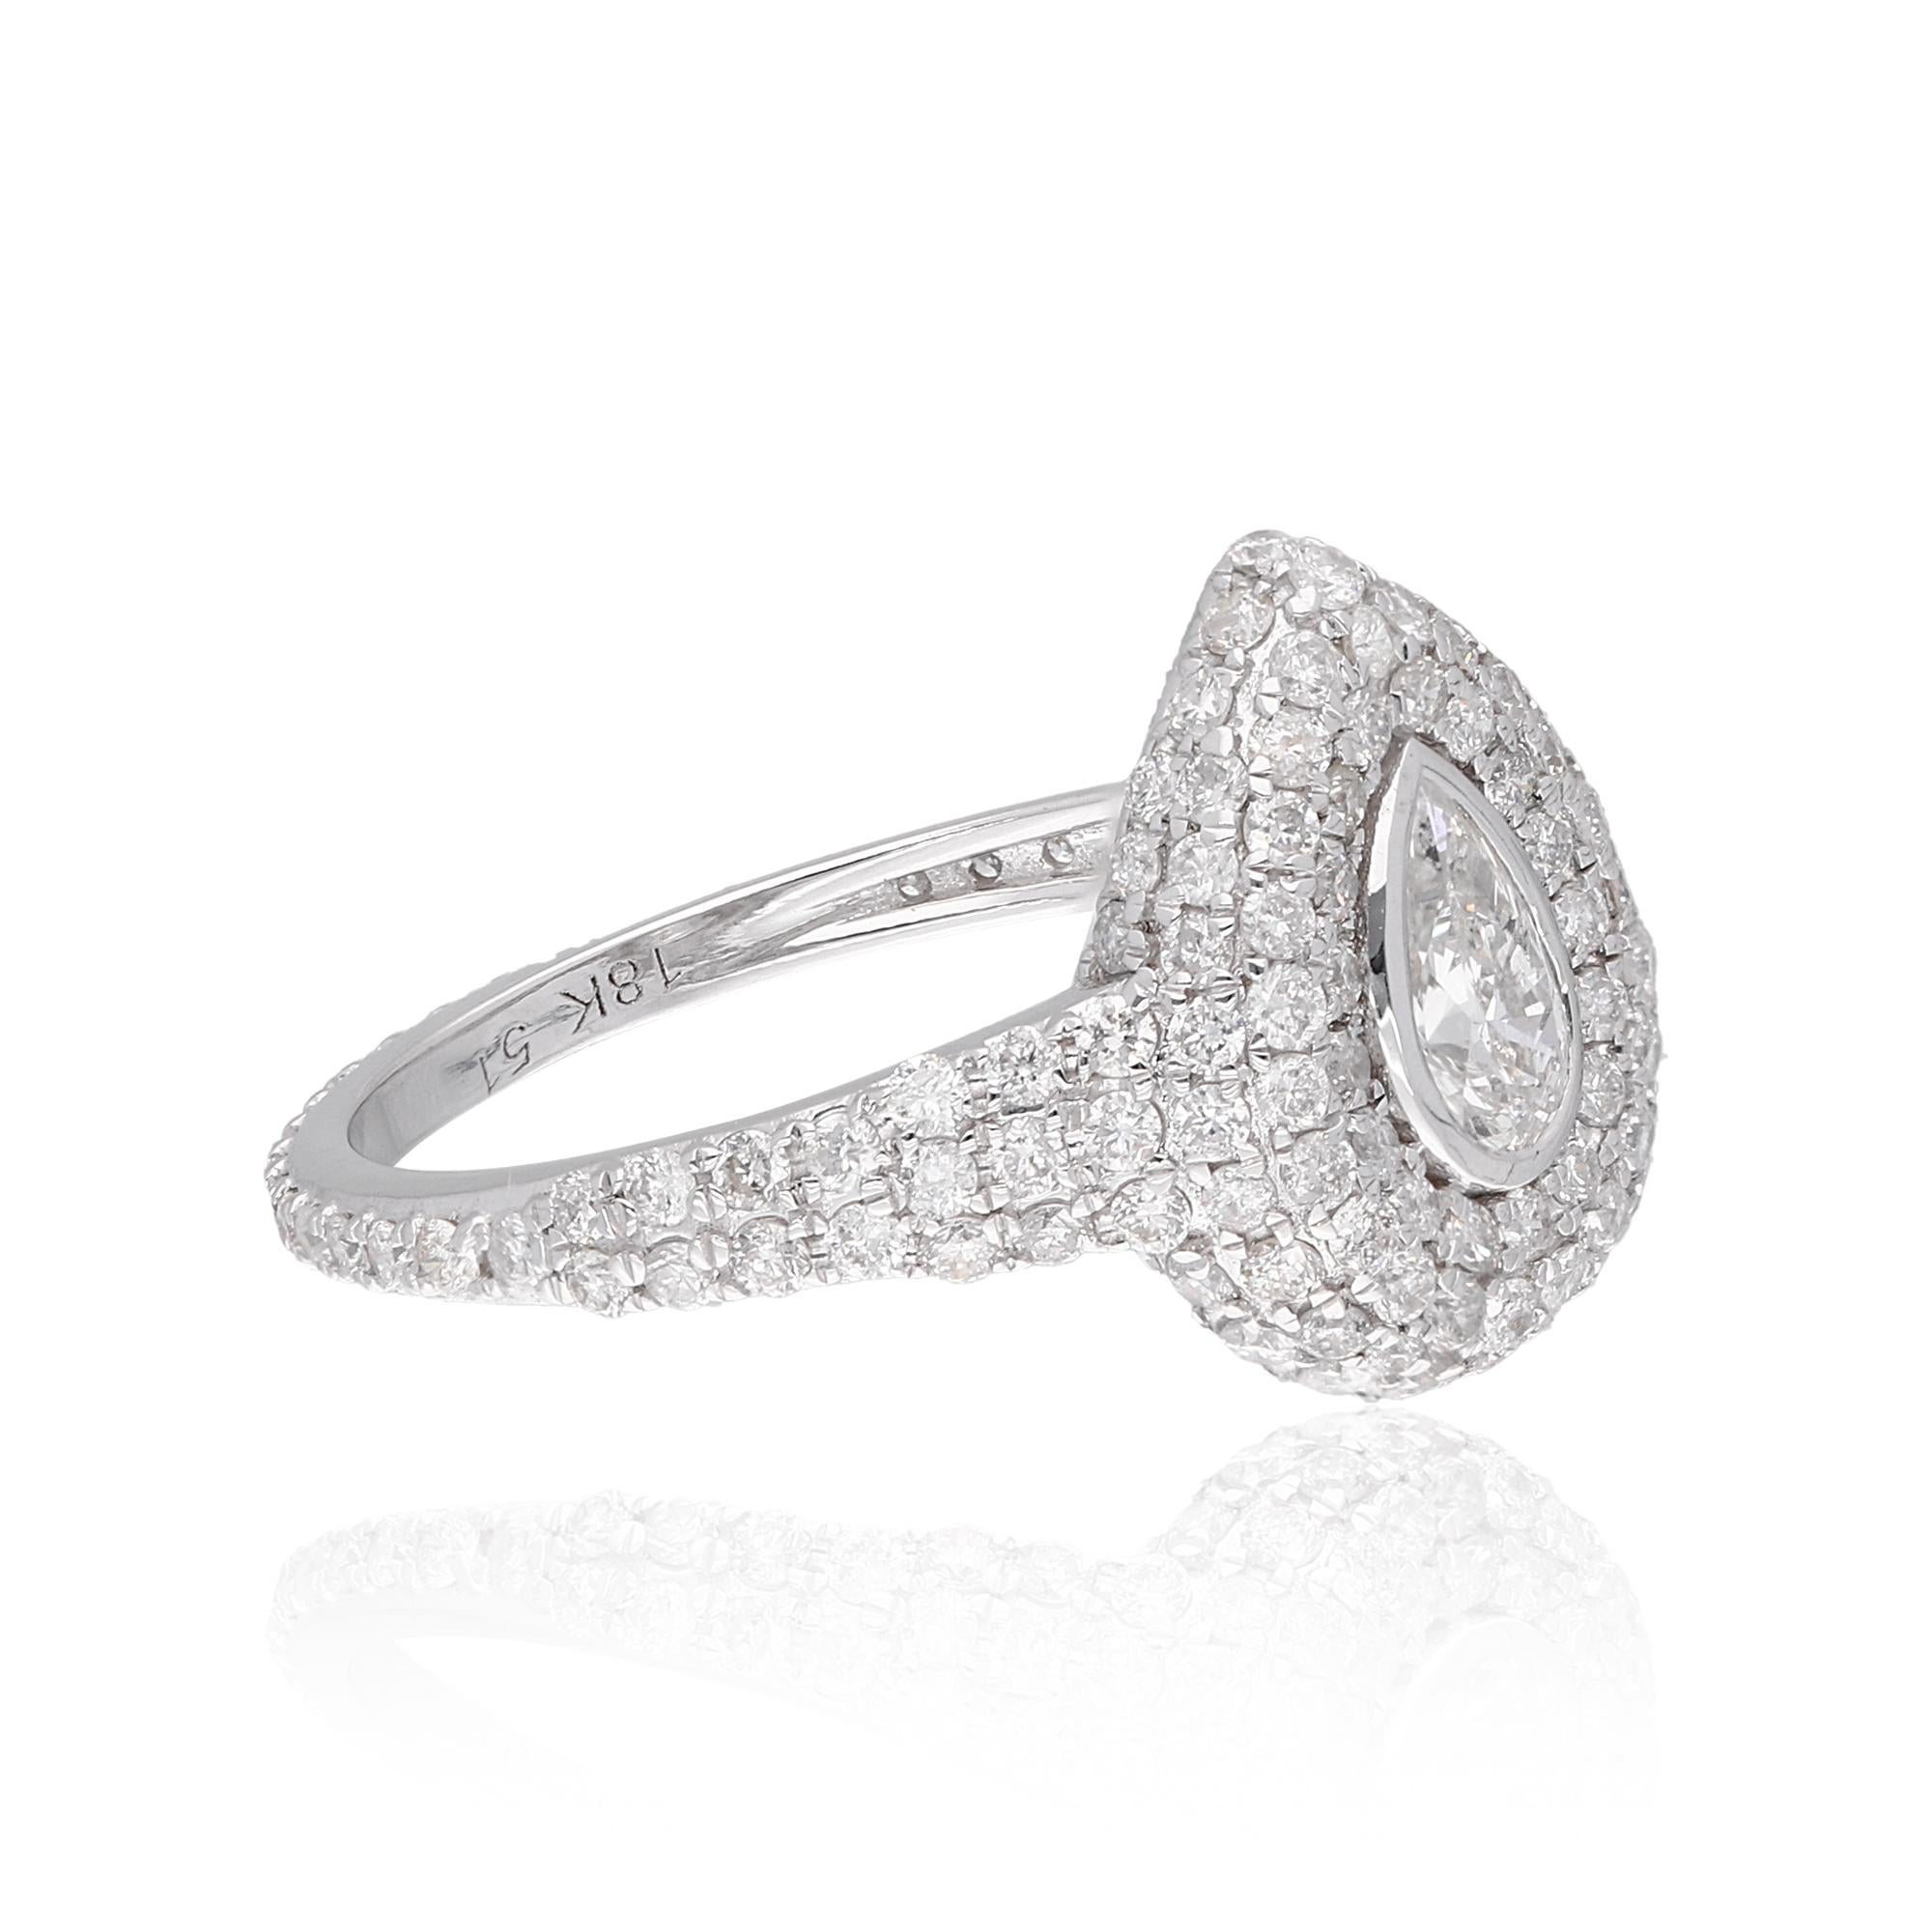 Women's 1.54 Carat Pear Diamond Studded Ring 14 Karat White Gold Handmade Fine Jewelry For Sale